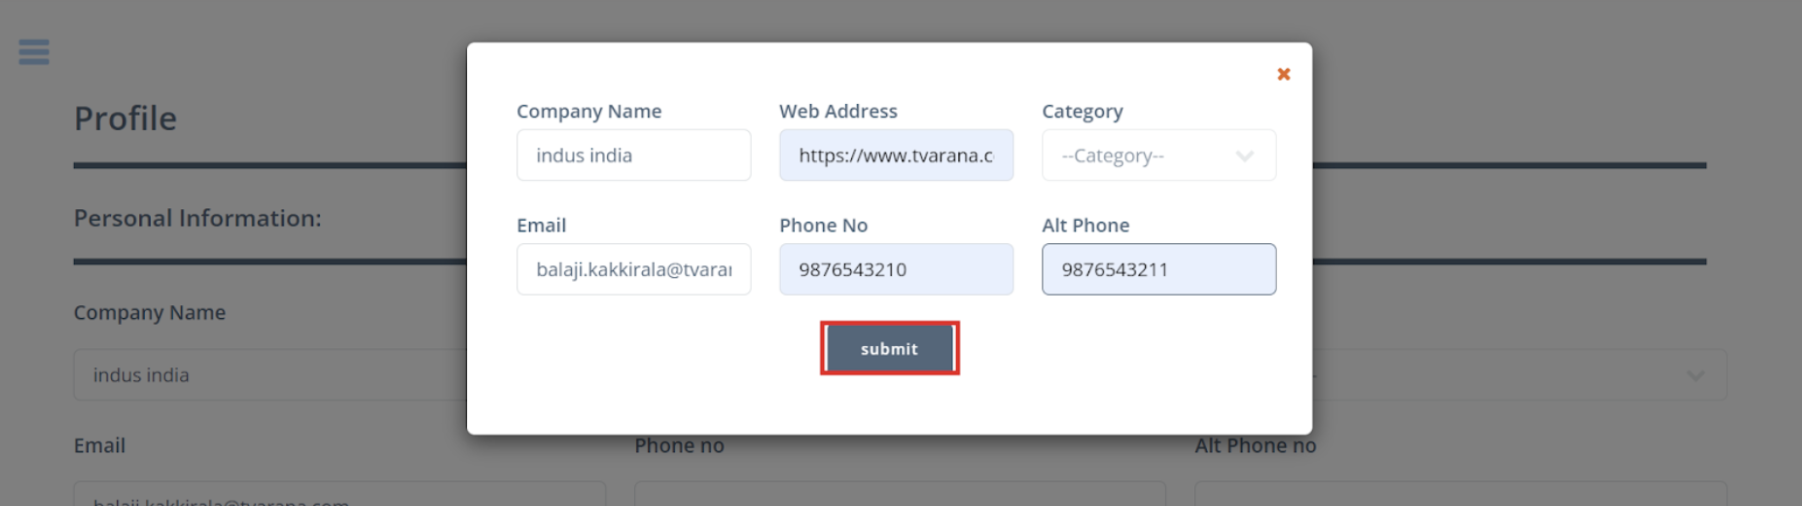 NetSuite vendor portal